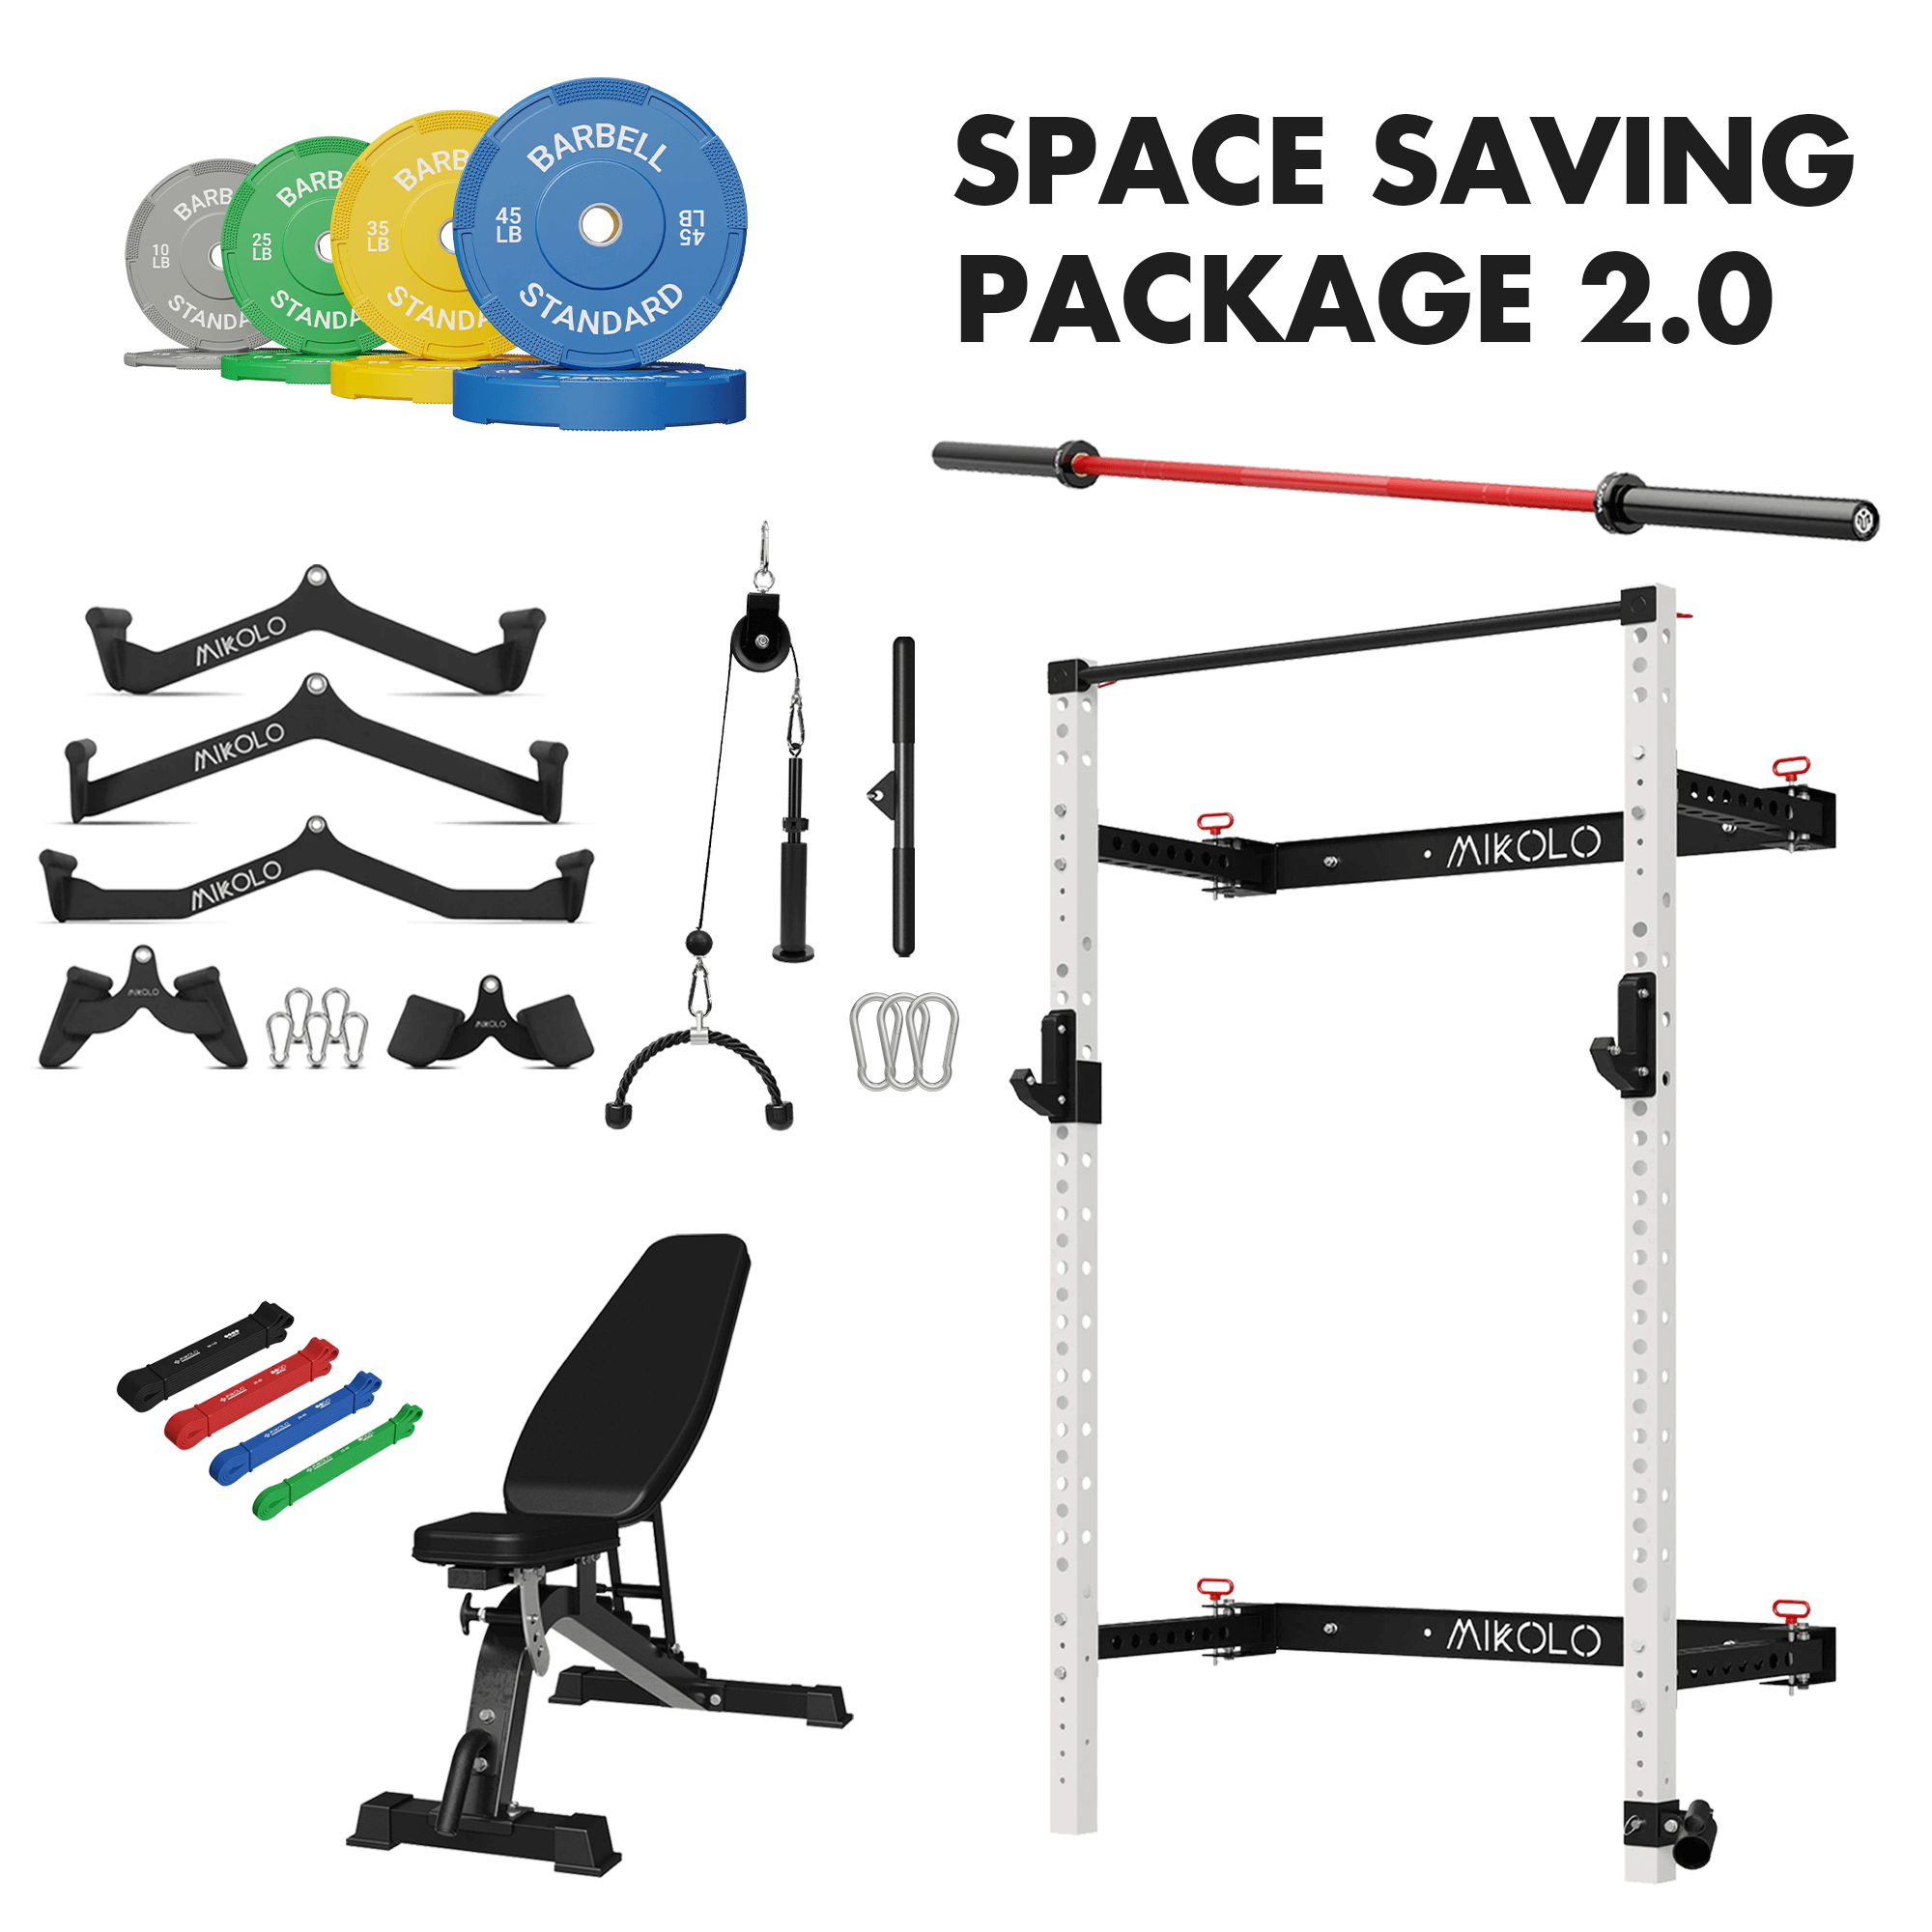 Space Saving Package 2.0